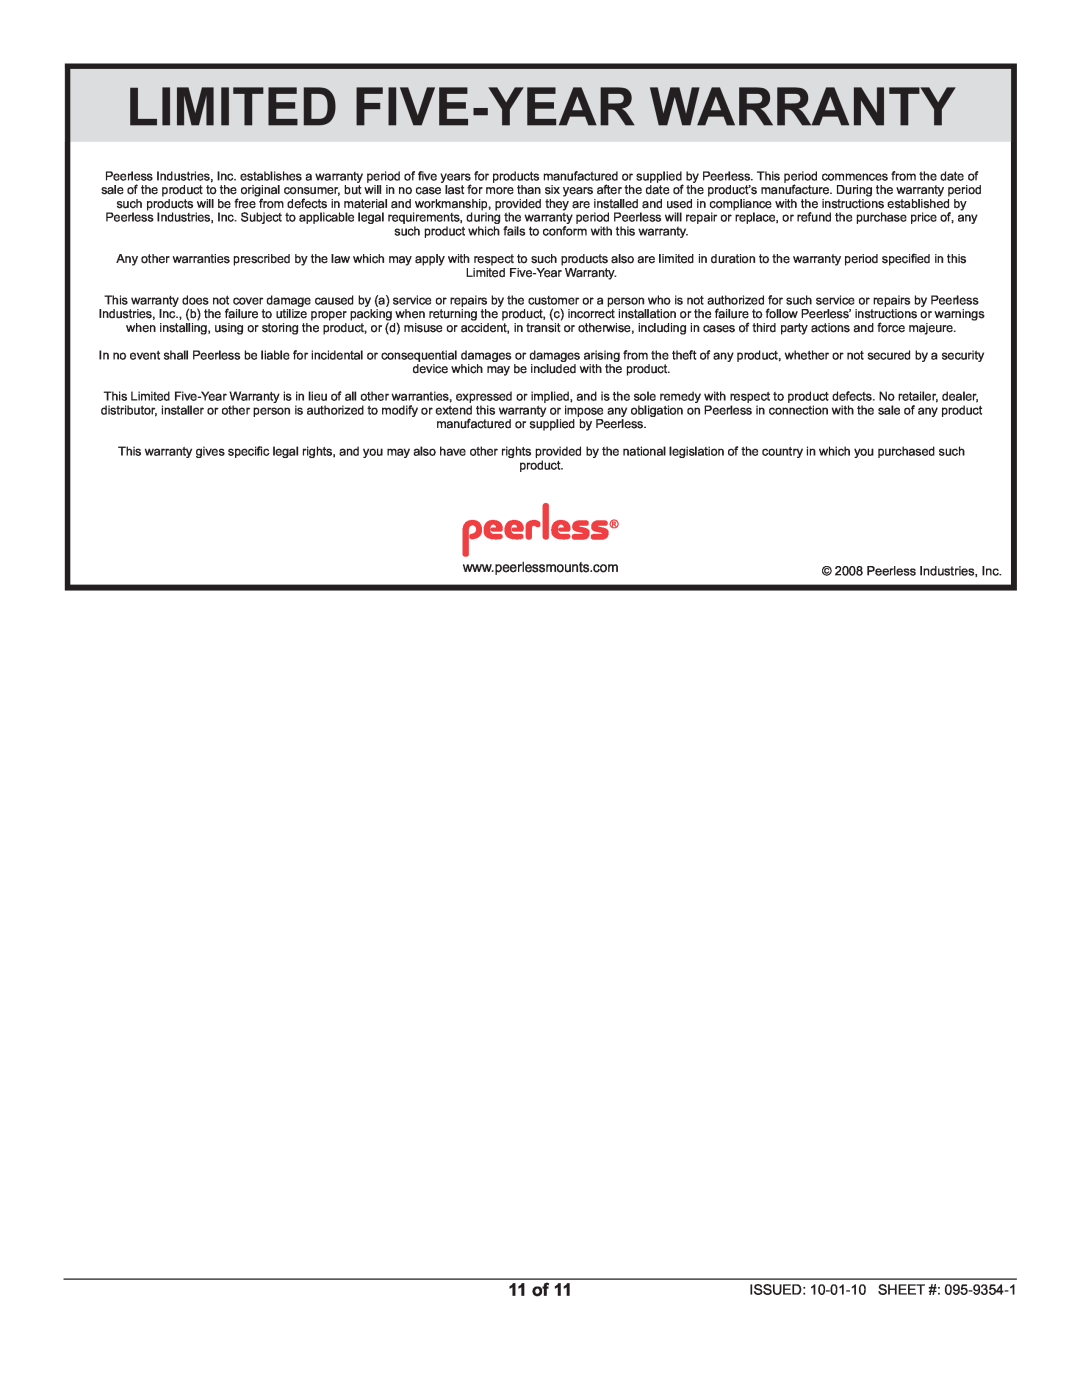 Peerless Industries SUAC9000 manual Limited Five-Yearwarranty, 11 of, ISSUED 10-01-10SHEET # 